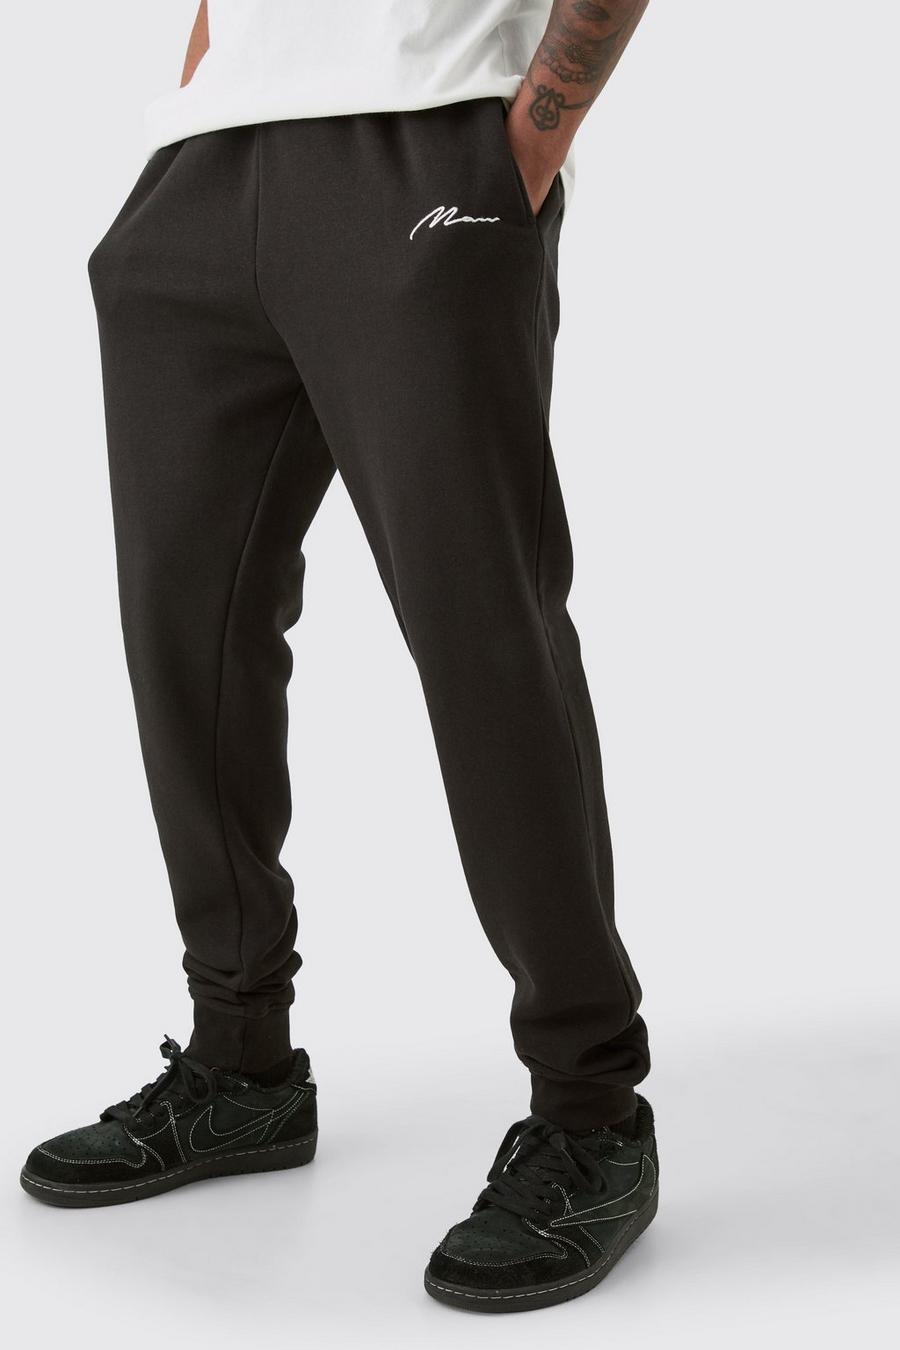 Pantalón deportivo Tall ajustado negro con firma MAN, Black